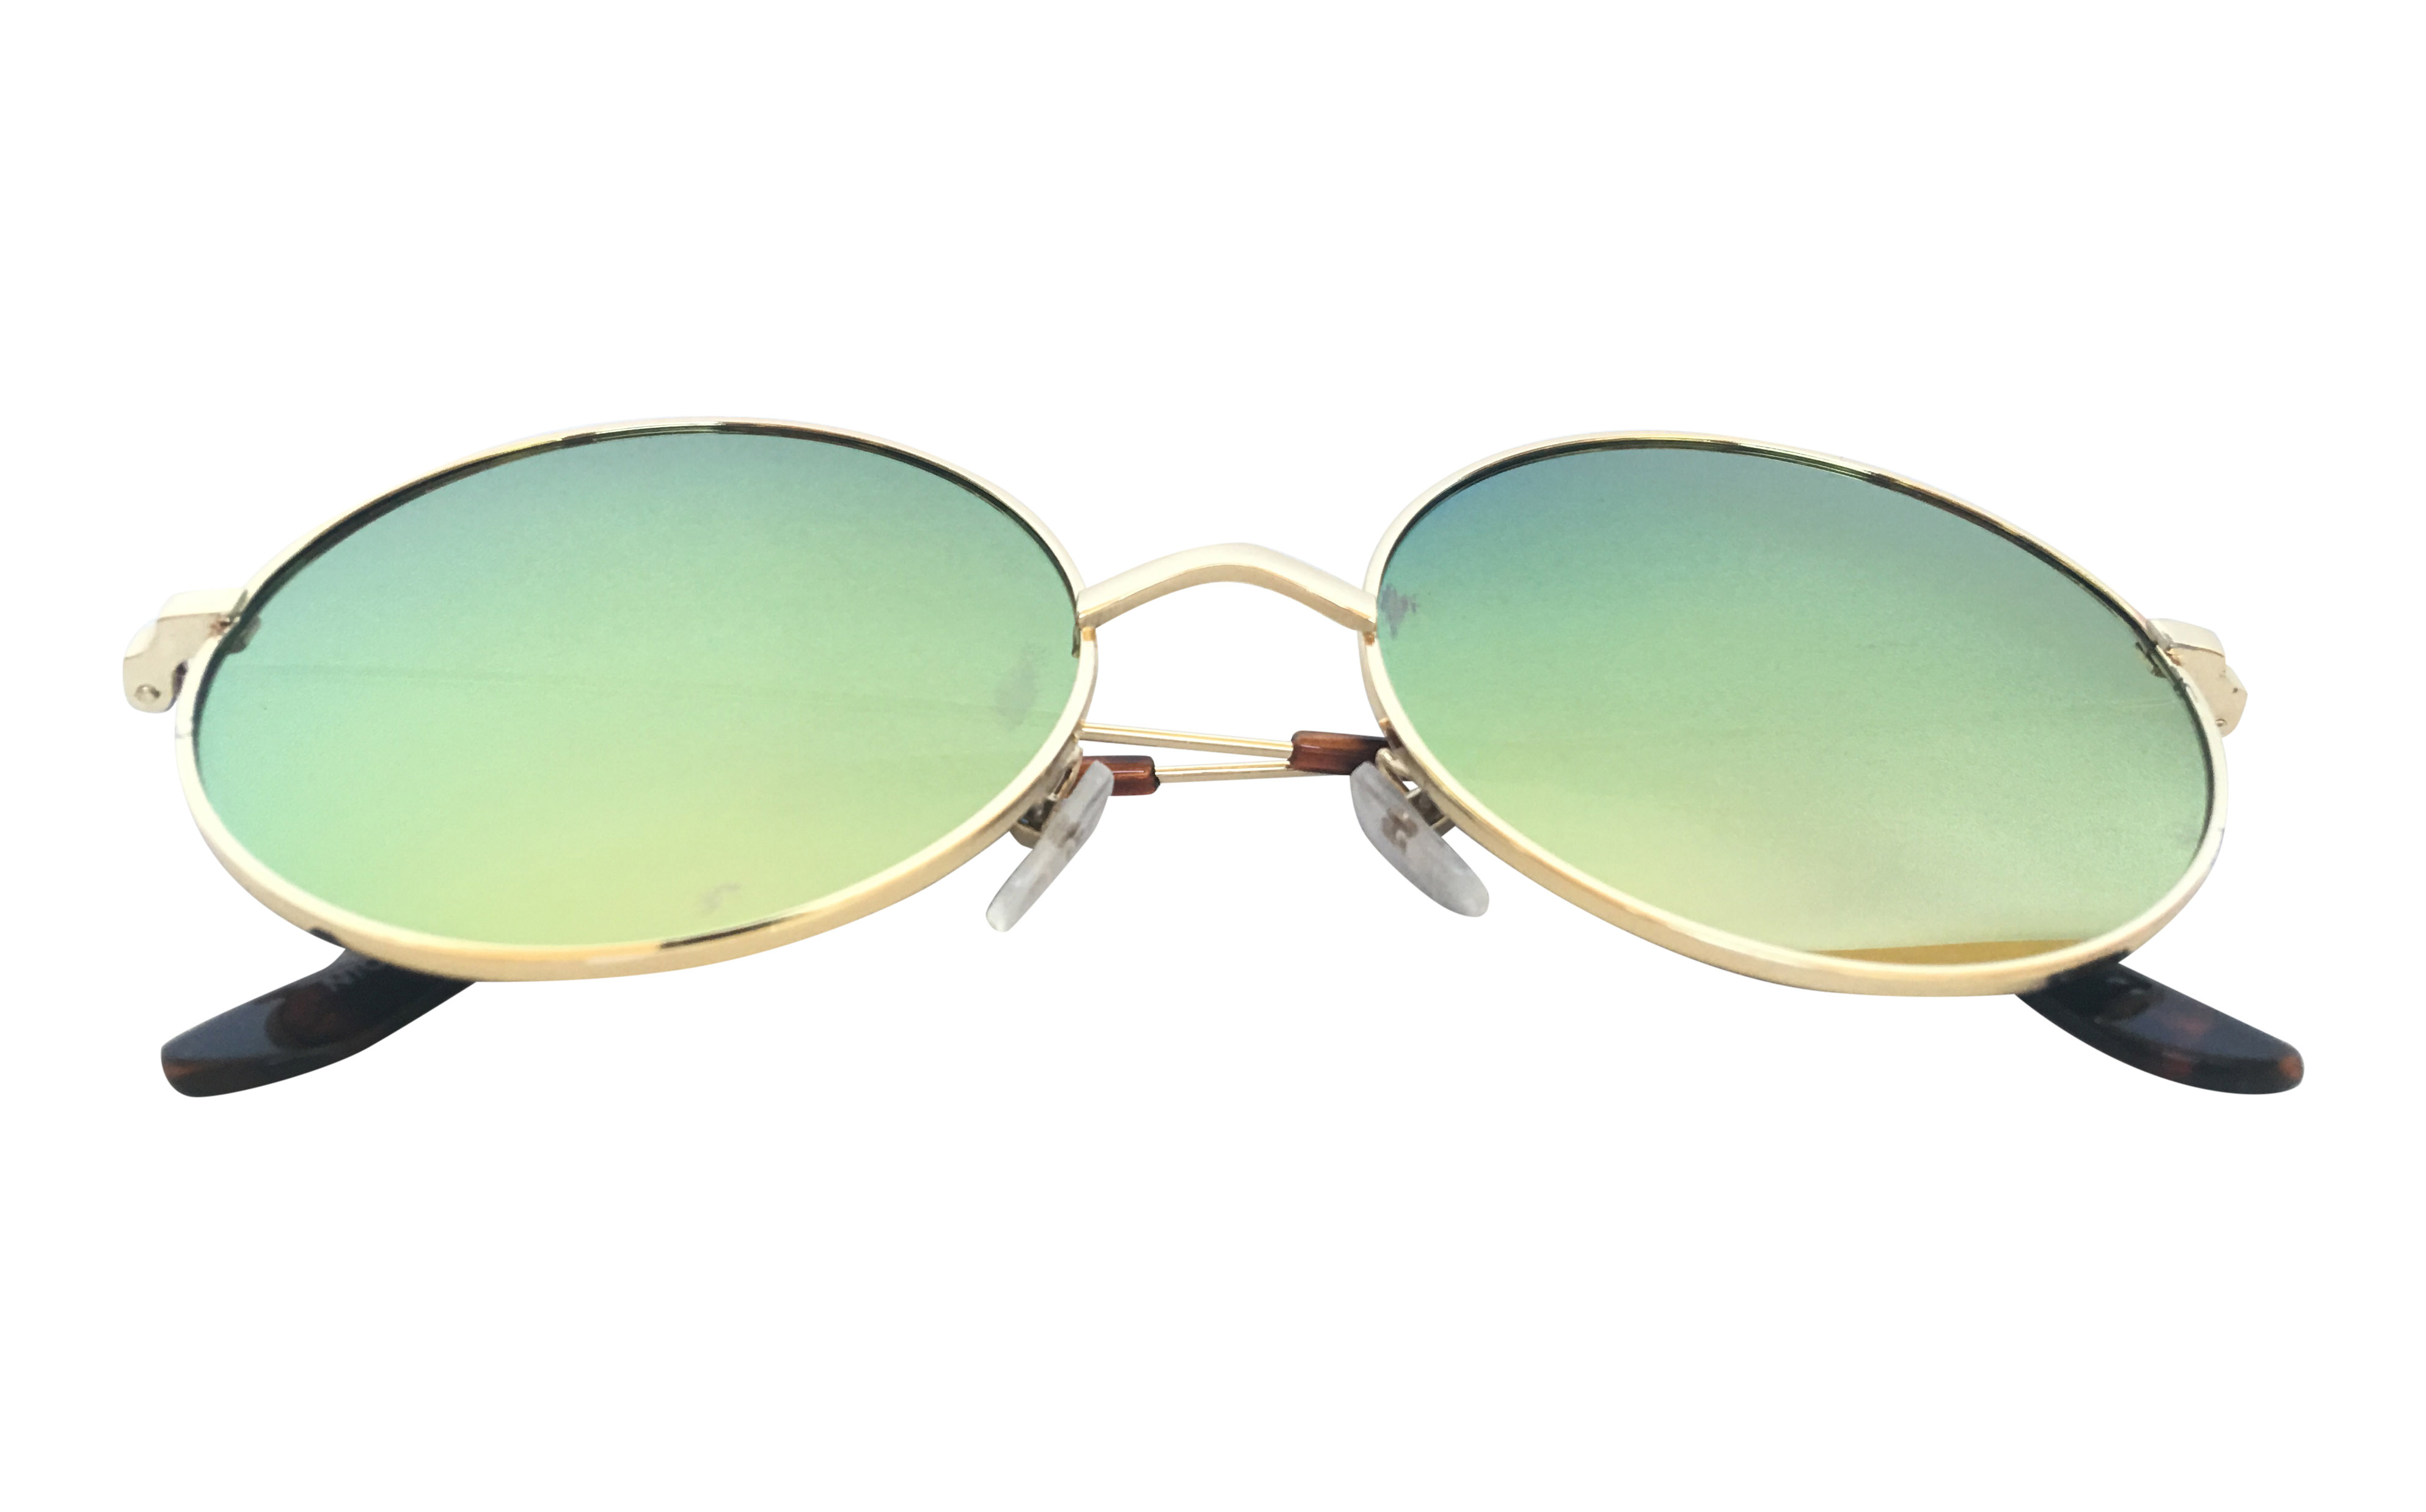 Hippie flower power solbrille i guld stel med farvet spejlglas. | festival-solbriller-3